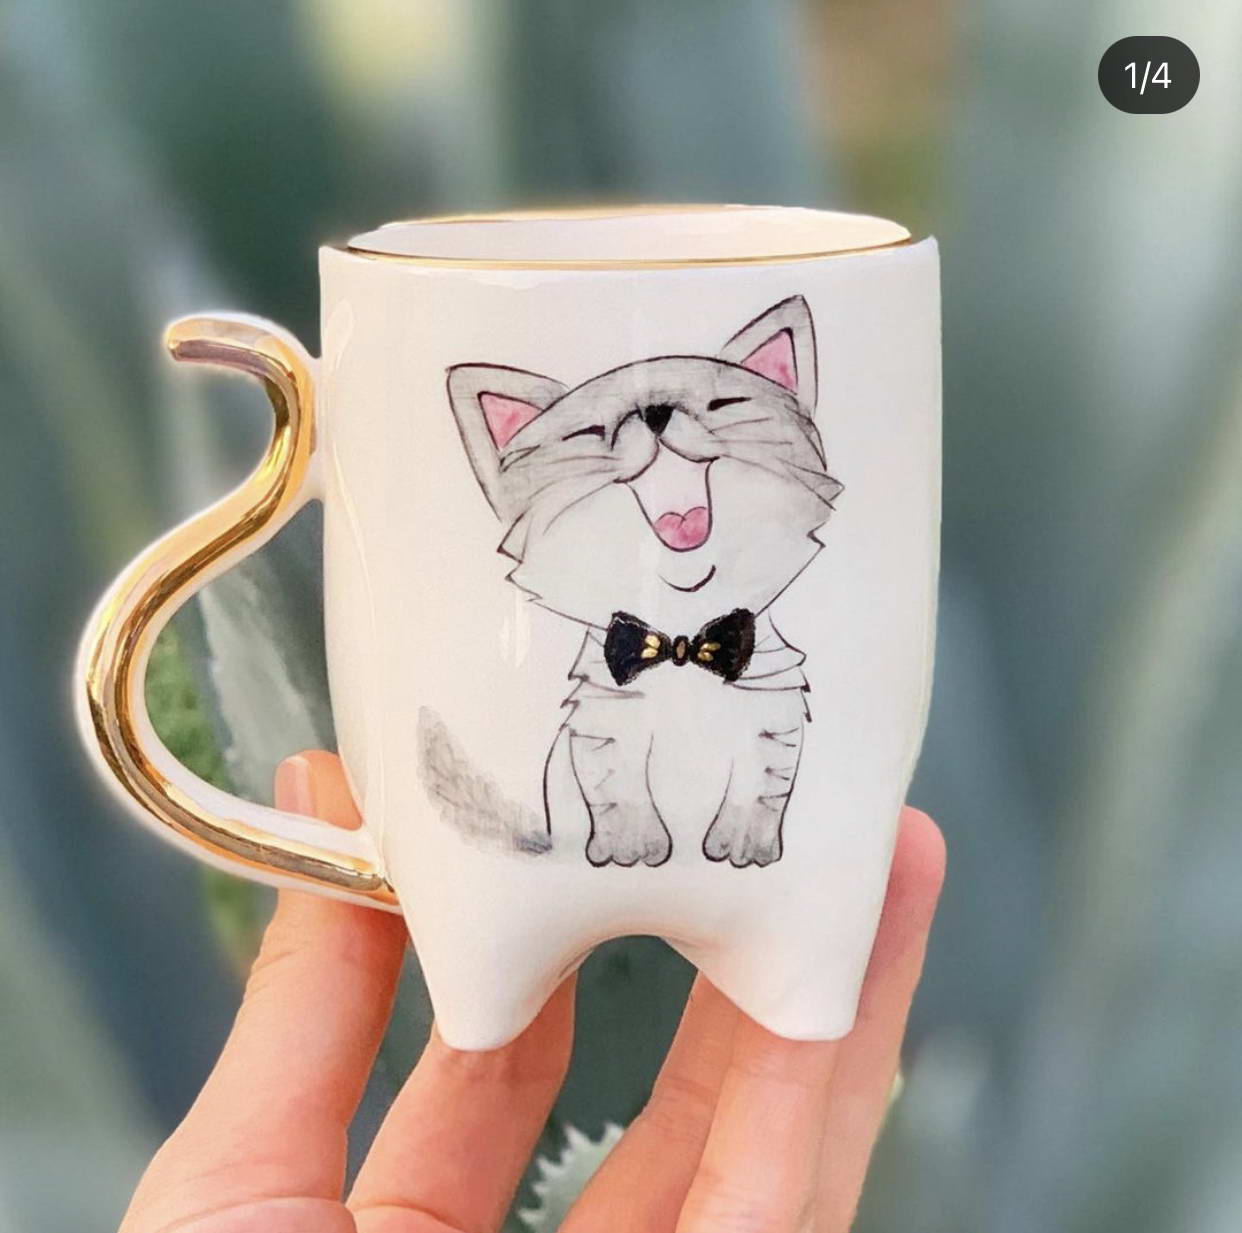 Kitty Mug with Bow Tie